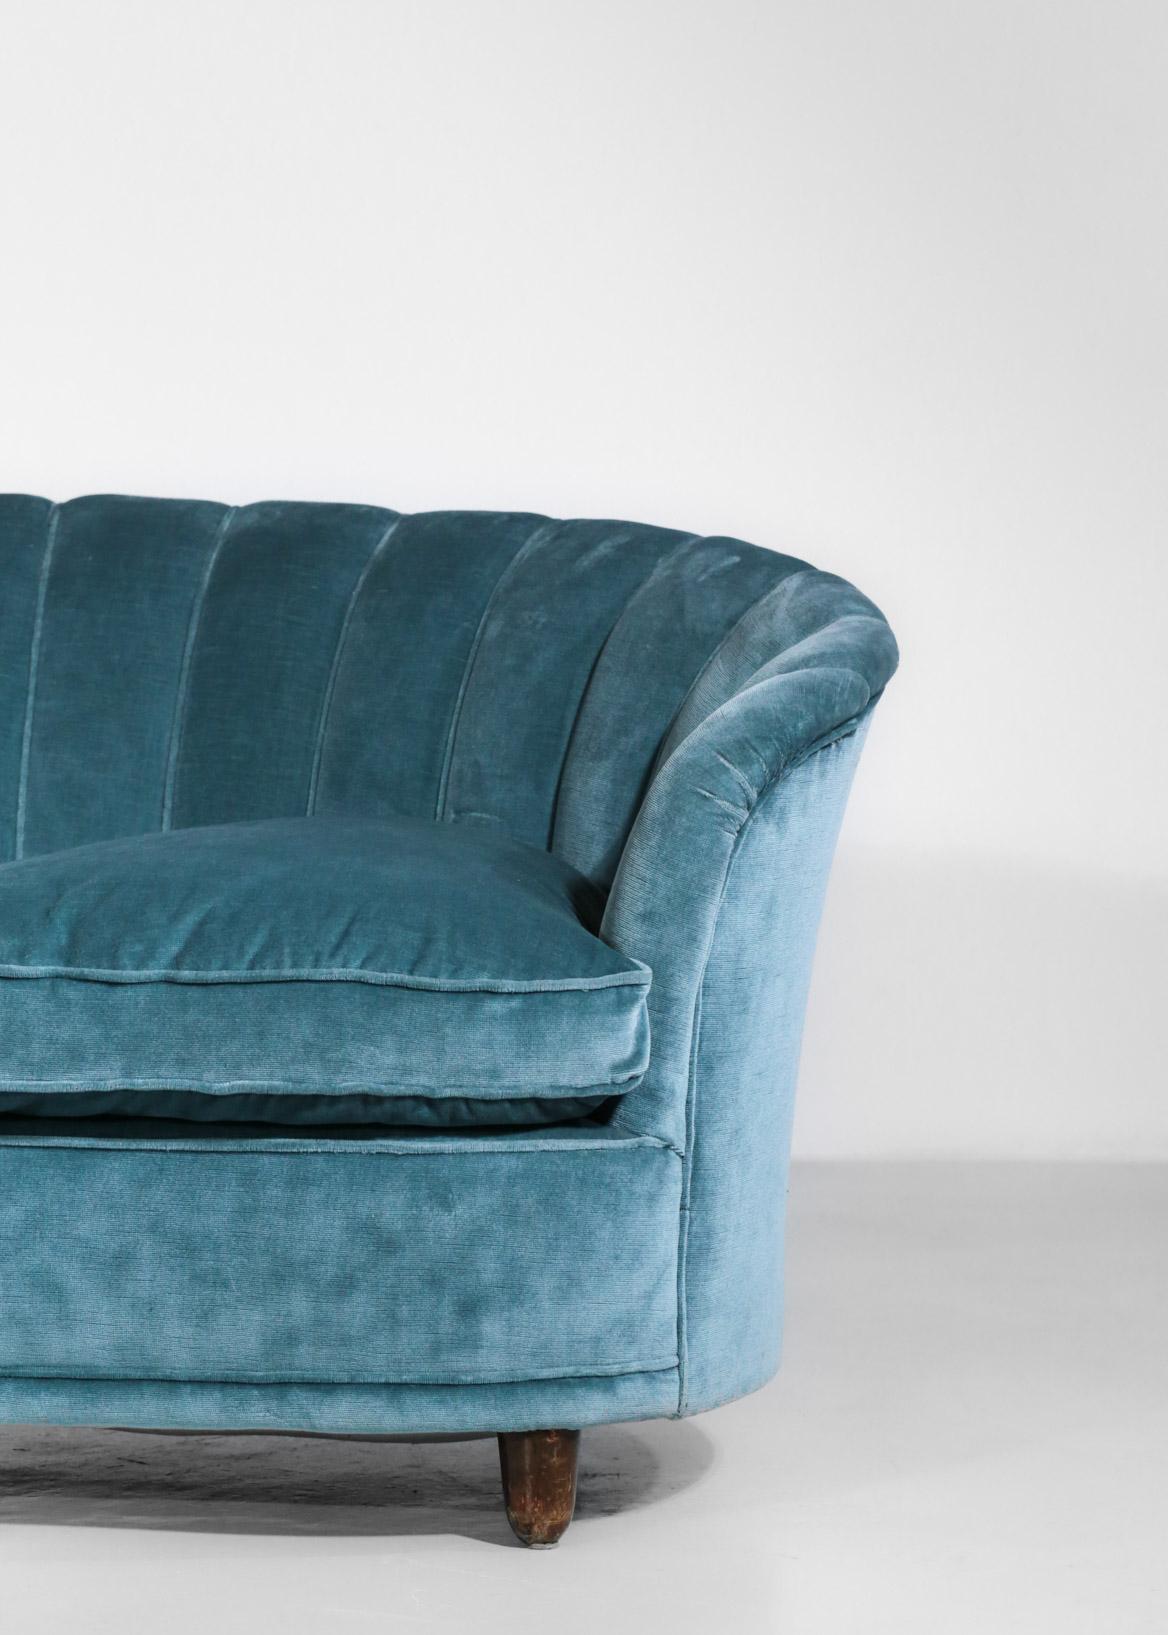 Italian Sofa by Gio Ponti Design 1960s Velvet Vintage Designer 2 Seat 6